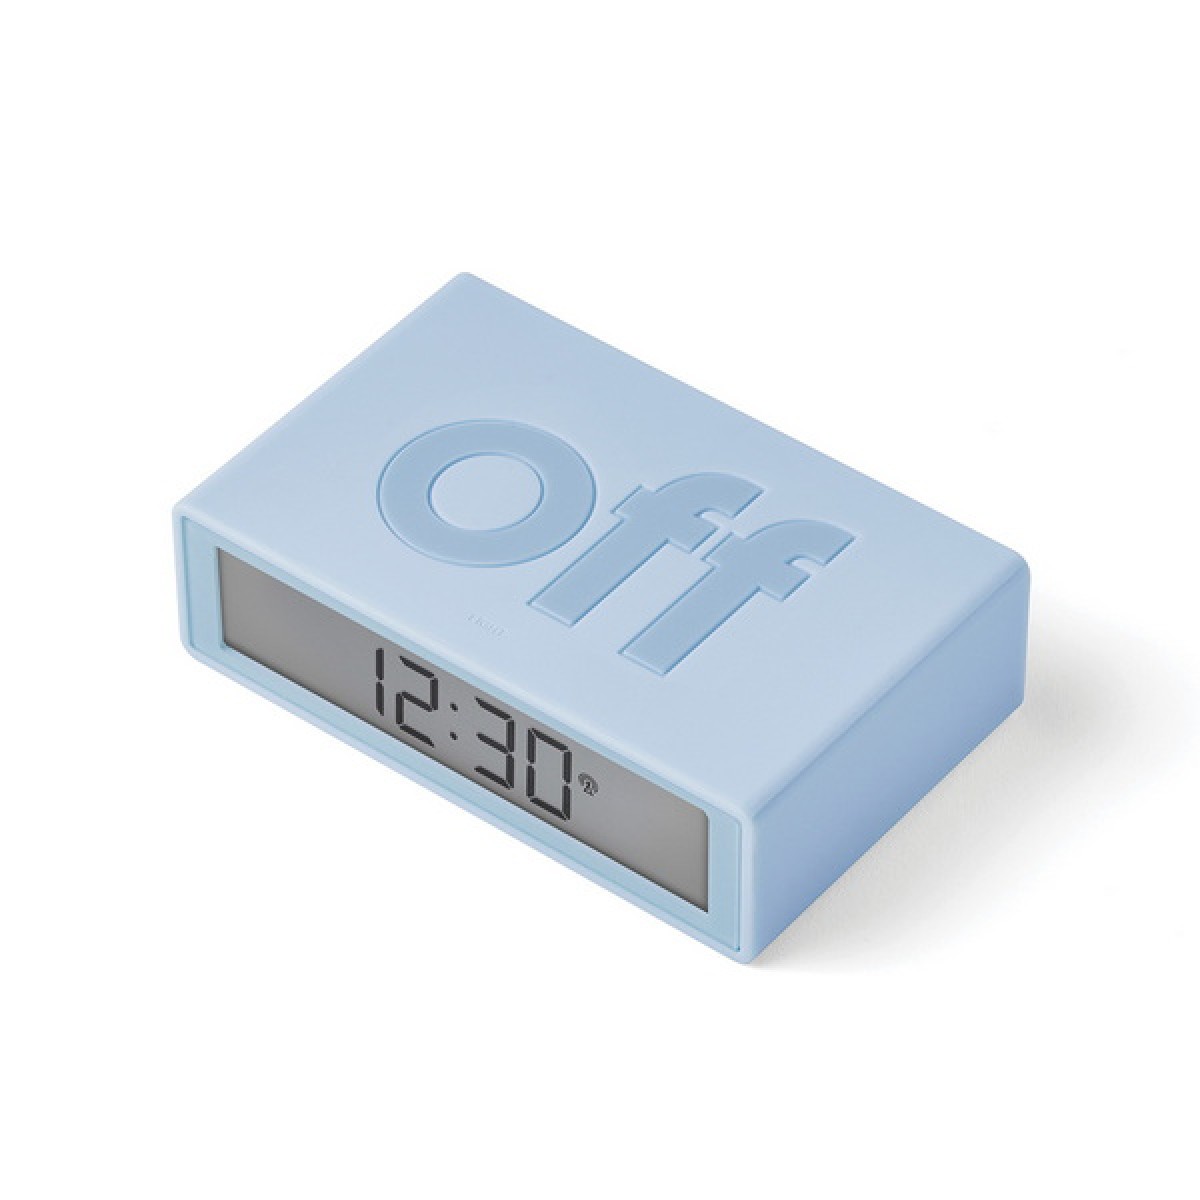 Lexon - Flip - Reversible LCD alarm clock - Light Blue